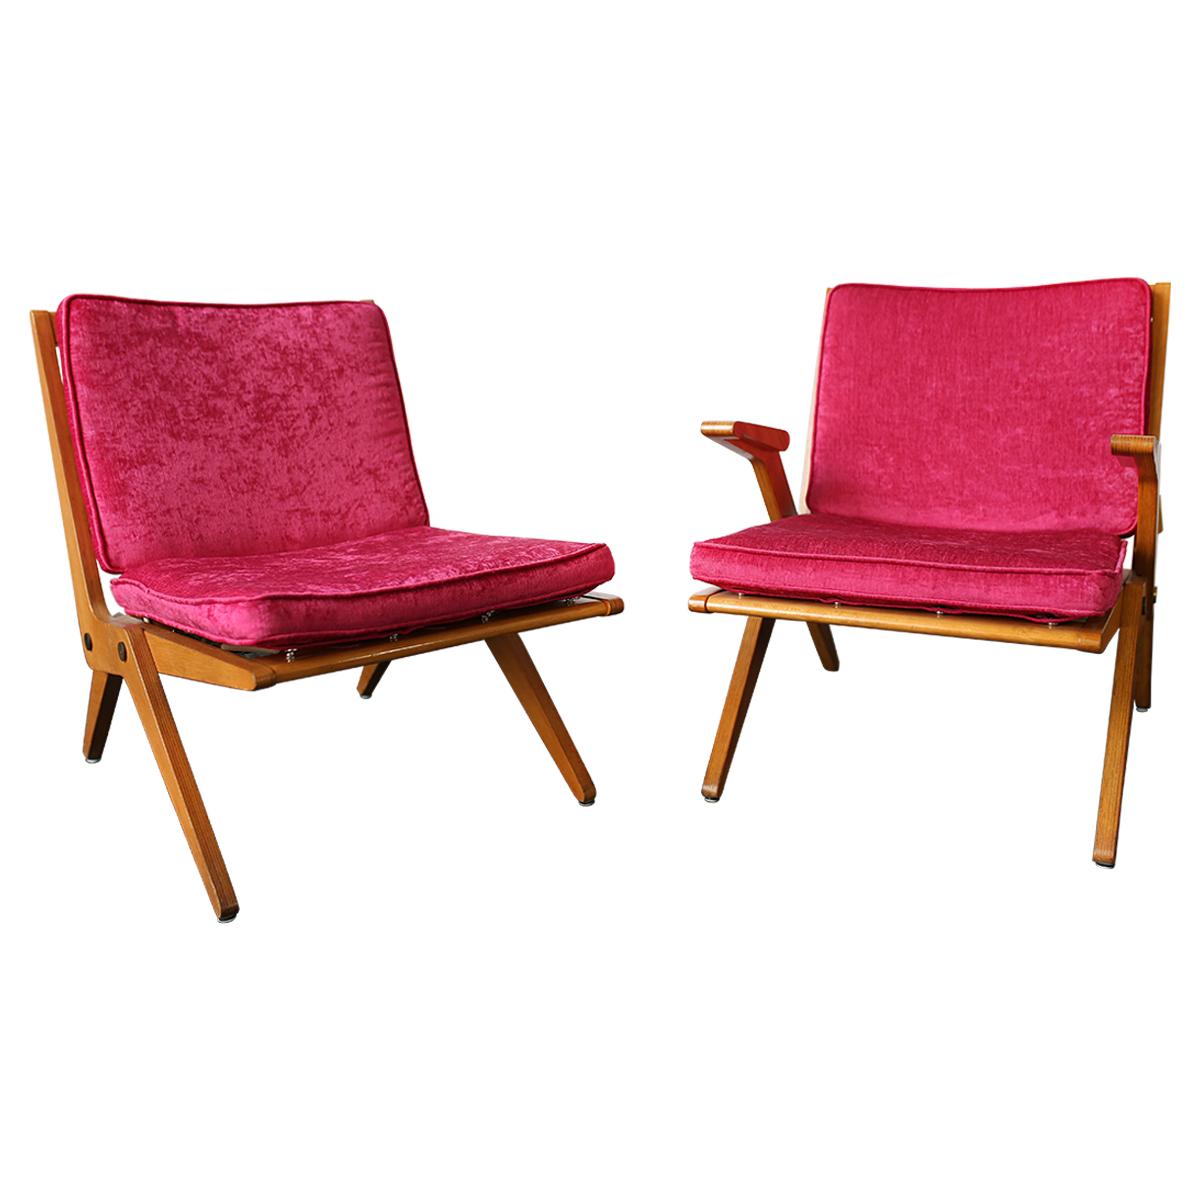 Pair of West German Lounge Chairs by Hans Mitzlaff & Albrecht Lange, circa 1950s